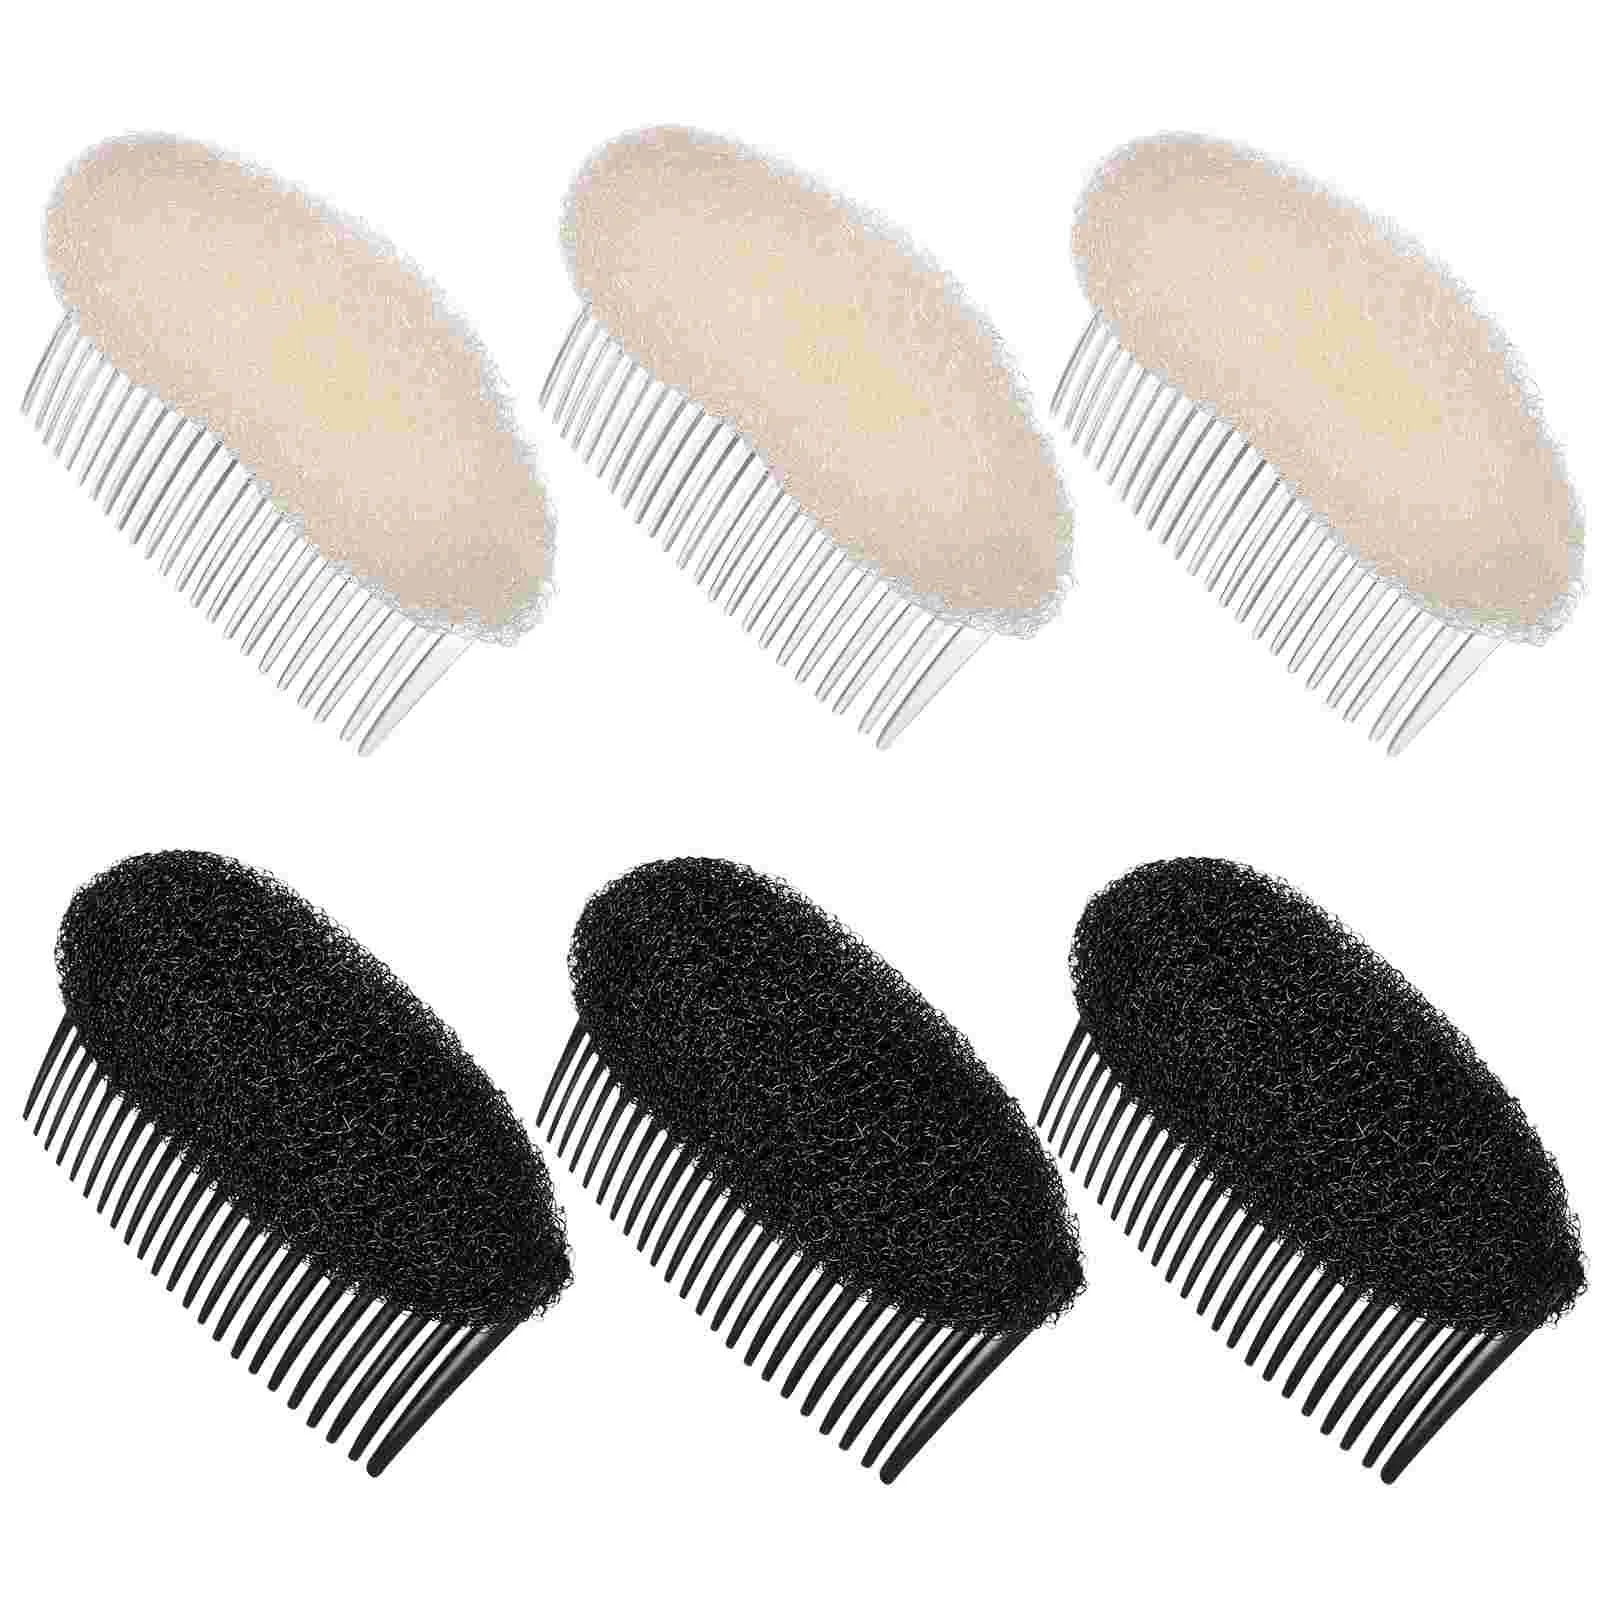 

6 Pieces Volume Hair Base Set Styling Insert Braid Tool Hair Shaper Bump Up Combs Clips Sponge Hair Bun Updo Accessories Hair